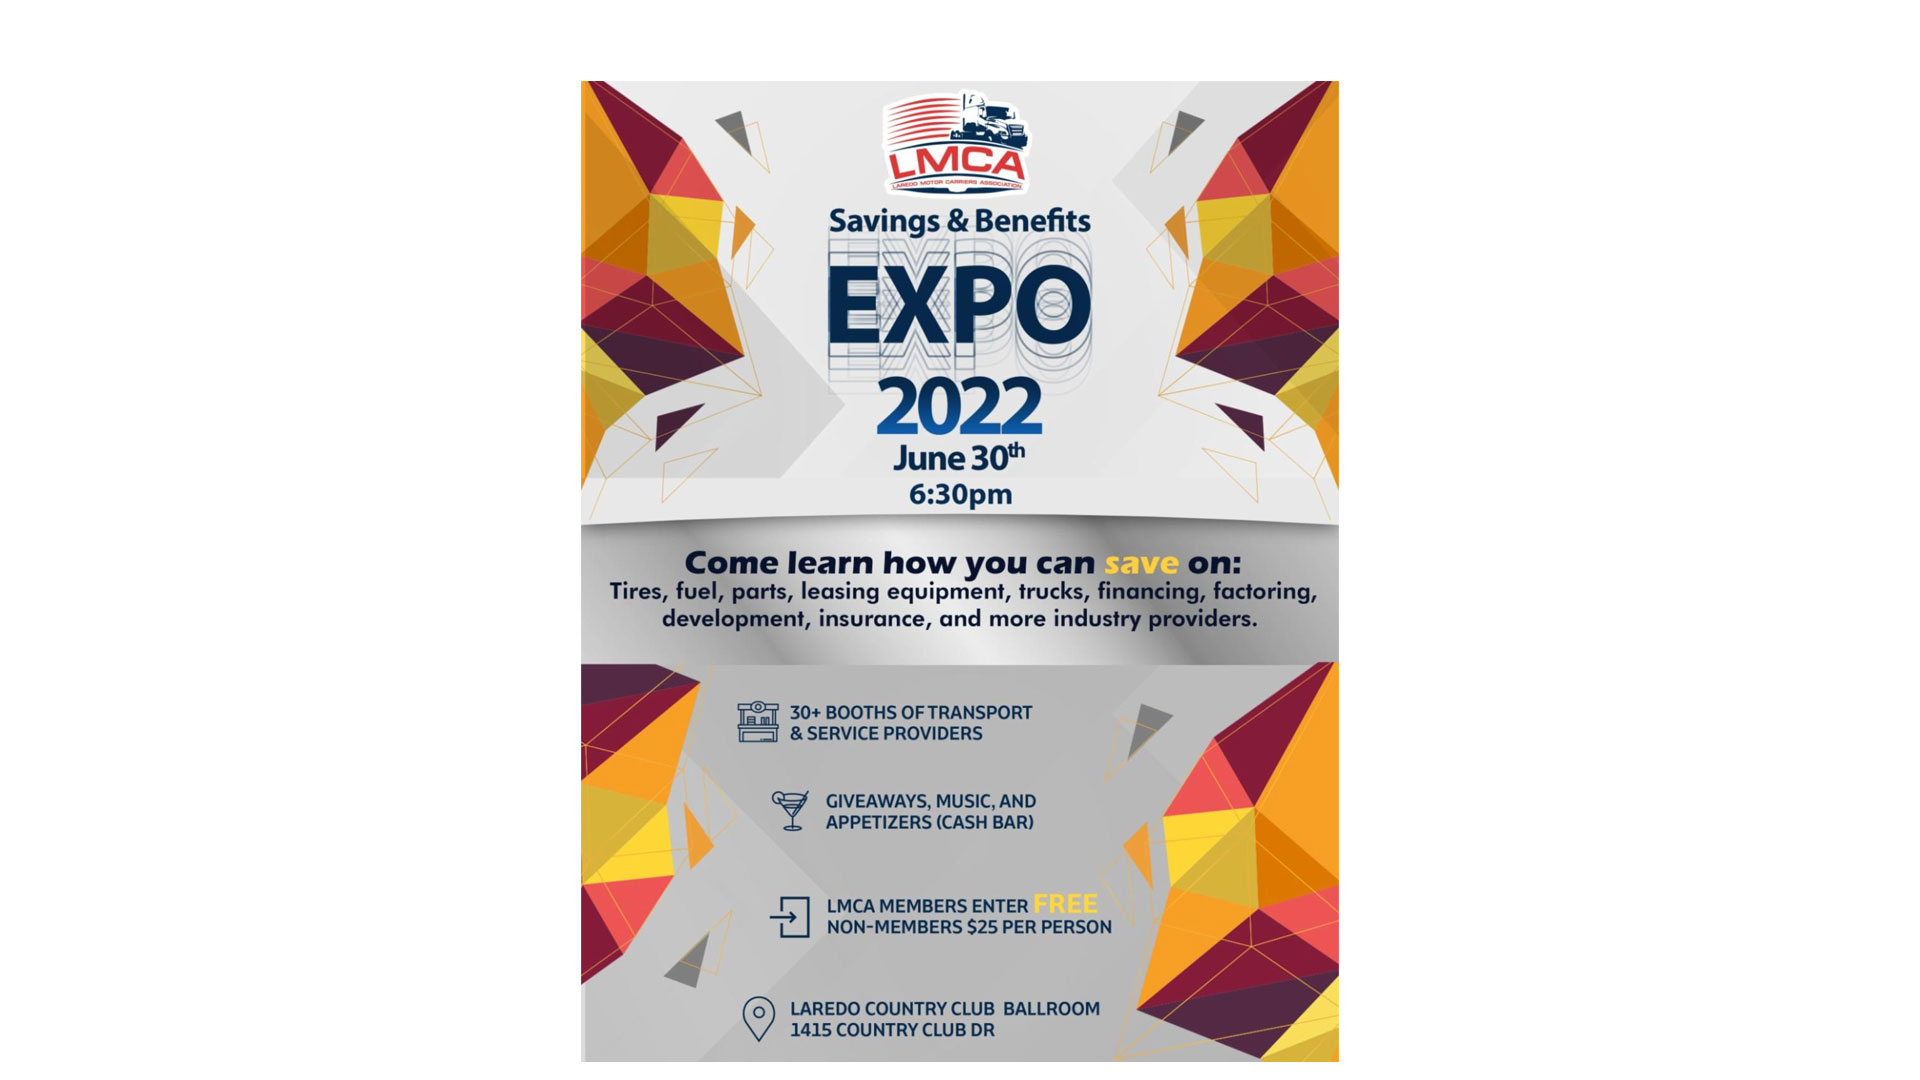 LMCA’s 3rd Annual Savings & Benefits Expo 2022 (Invitation)